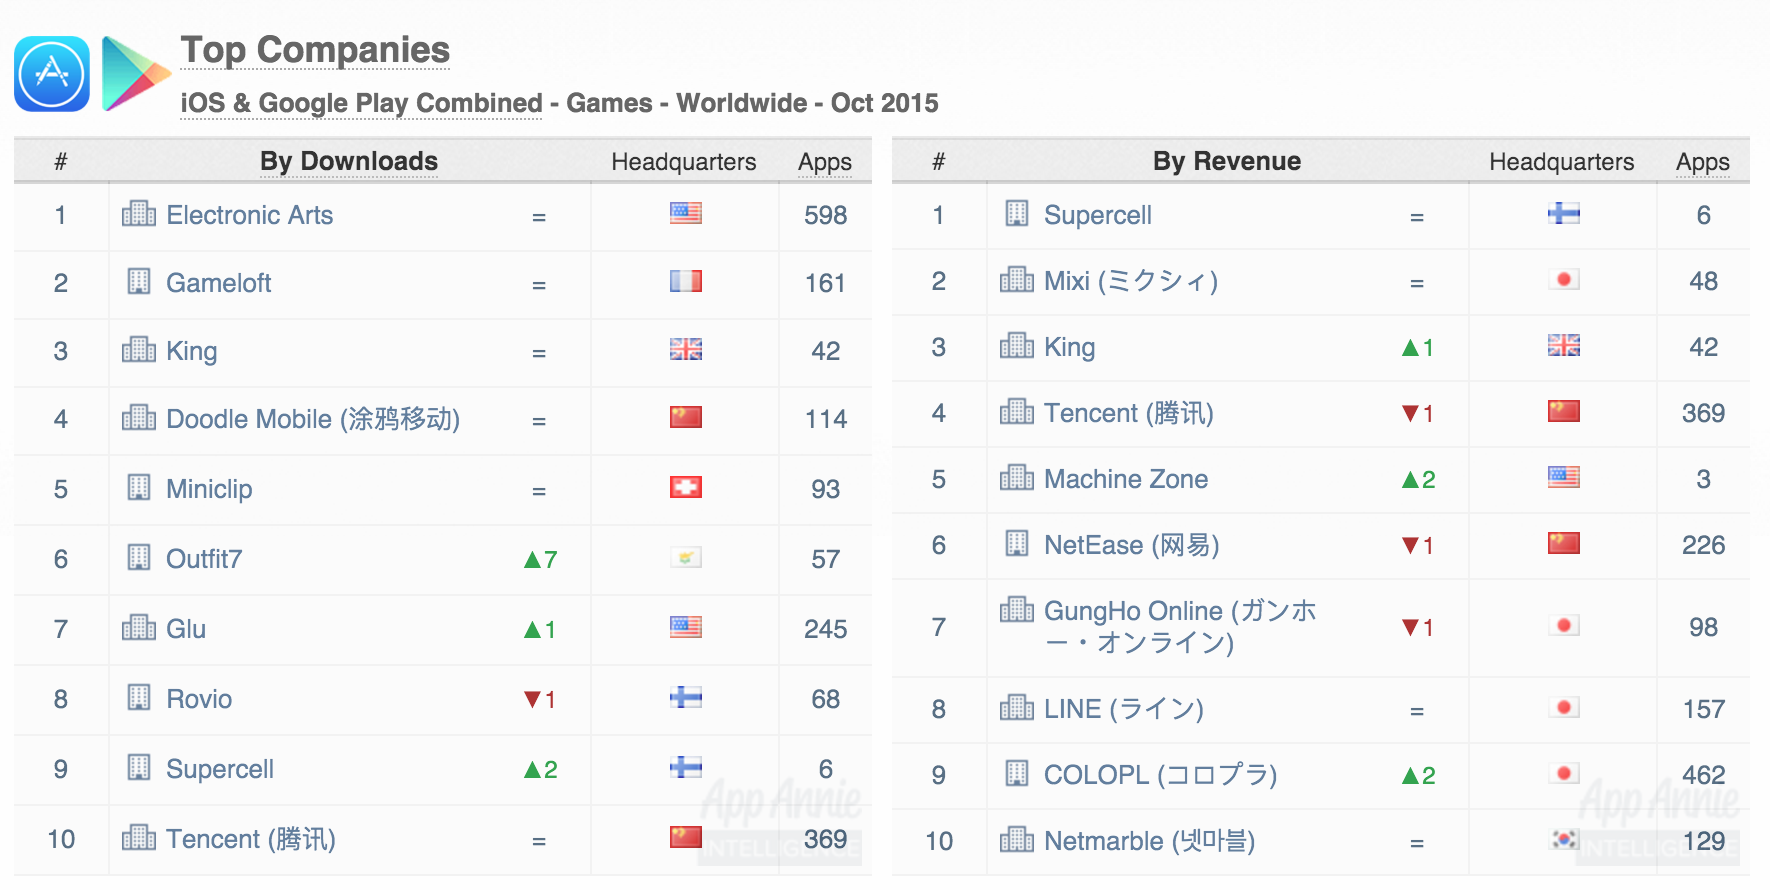 Top Companies iOS Google Play Games Worldwide October 2015